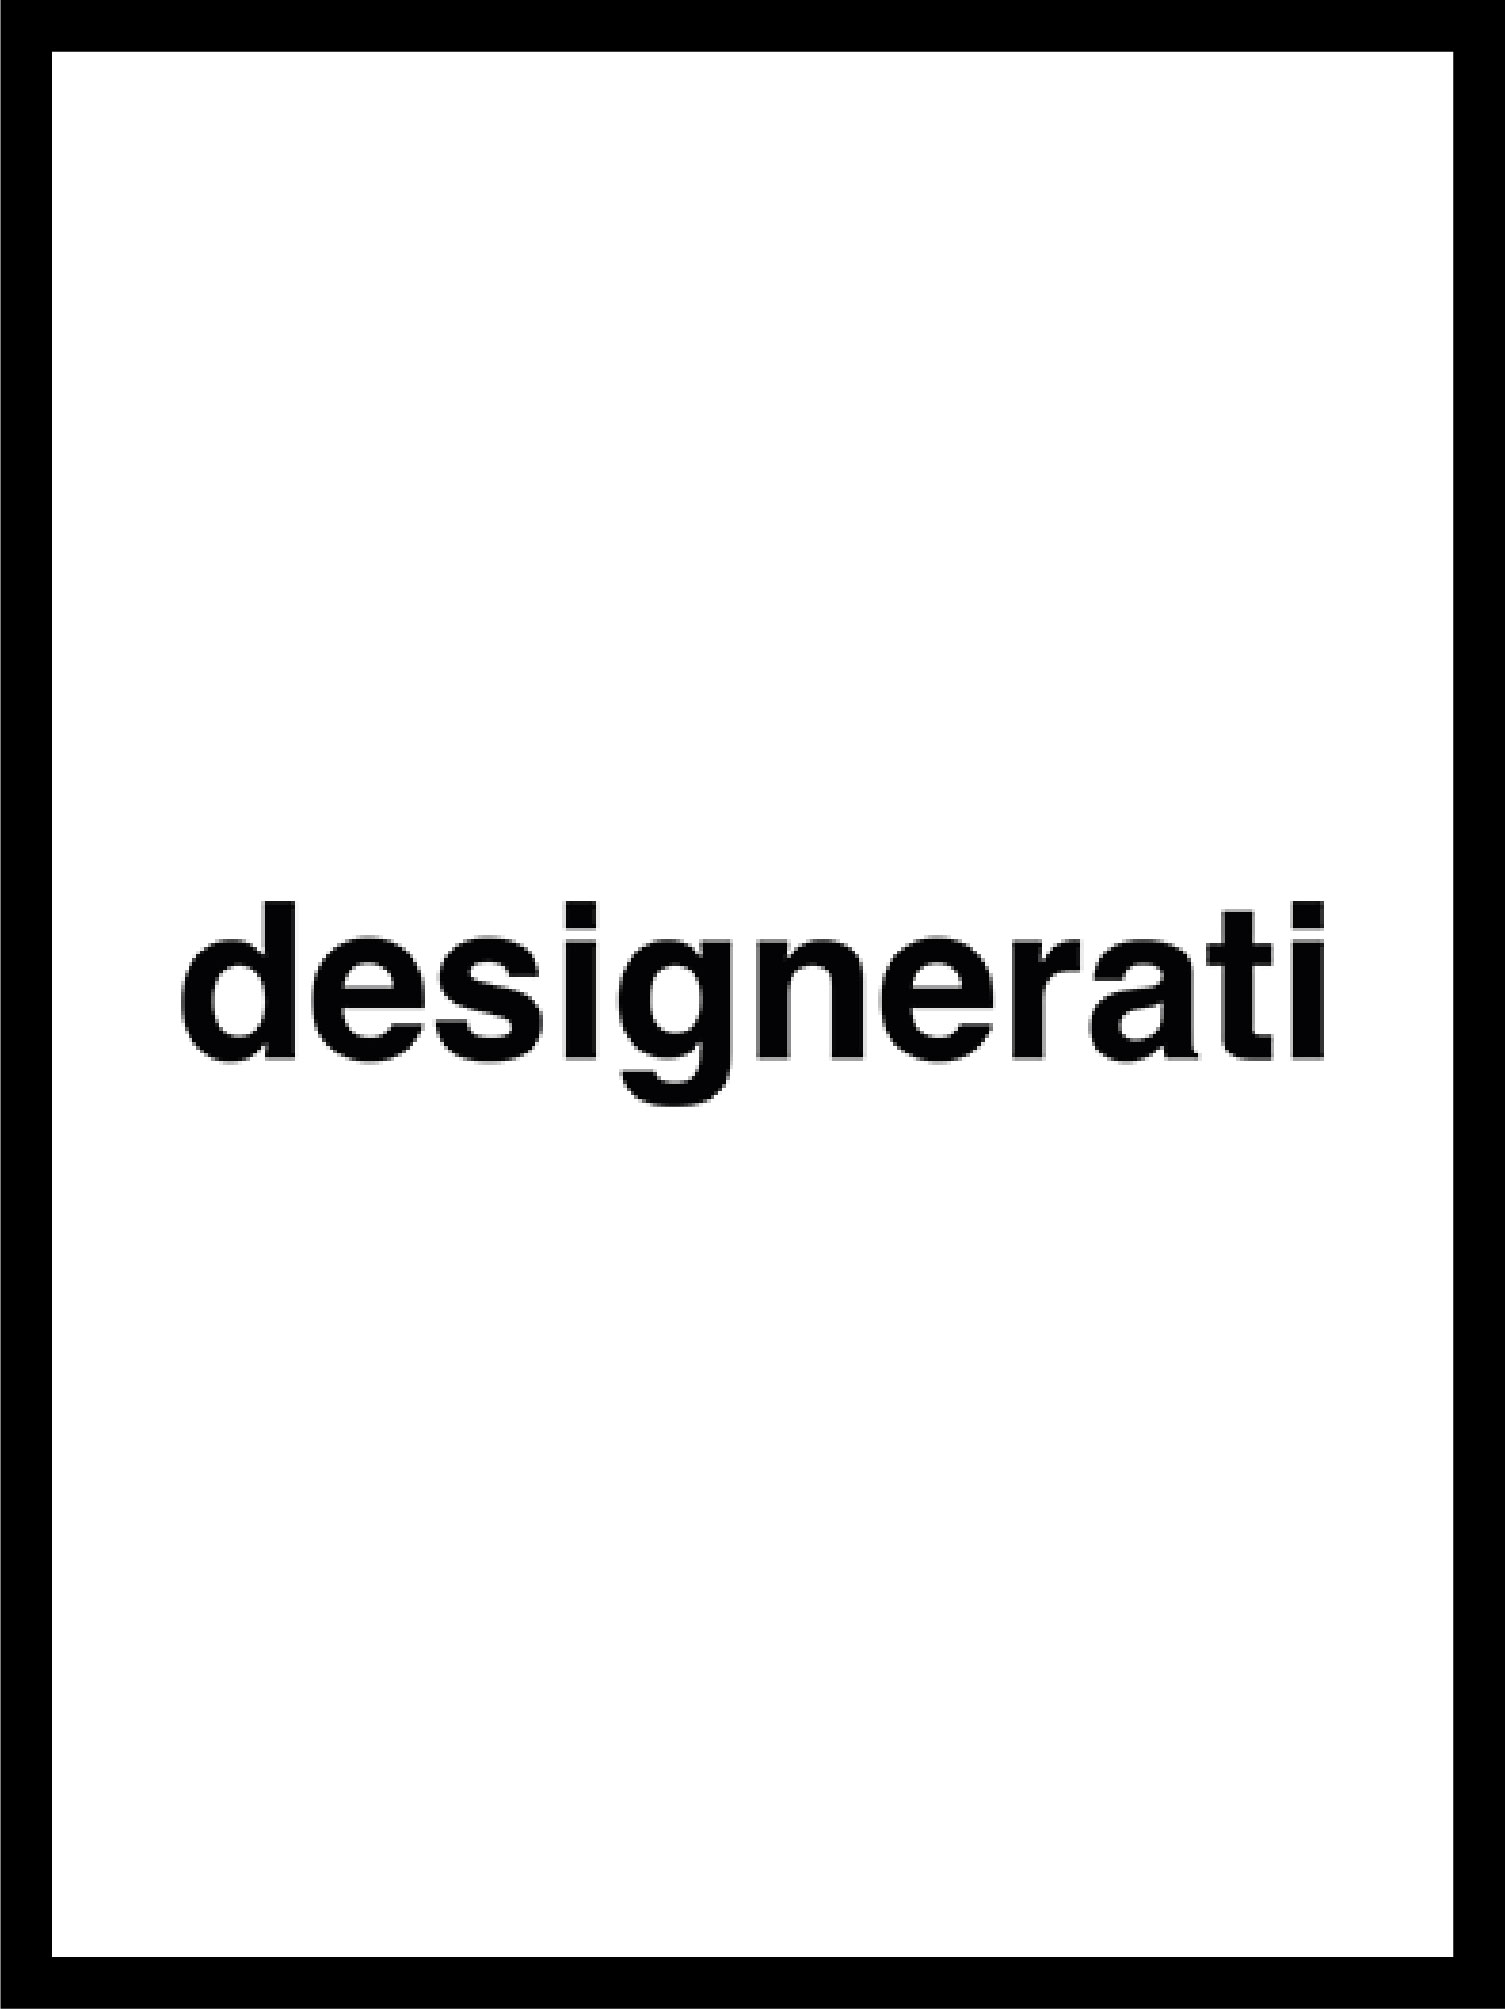 Couverture et logo du magazine designerati